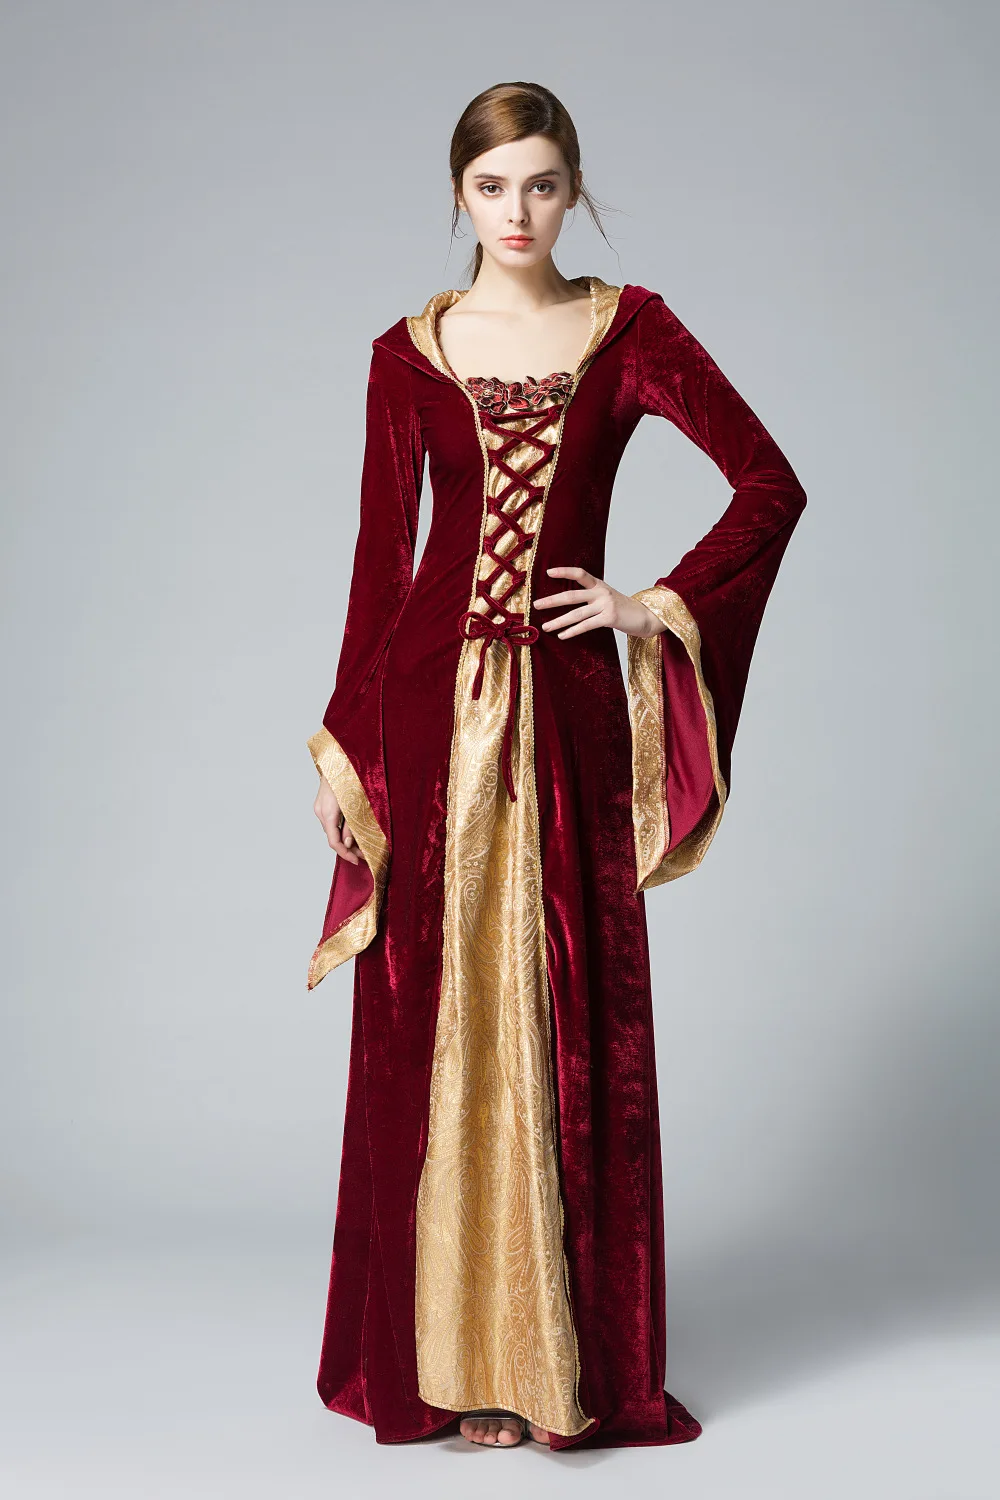 medieval queen dress